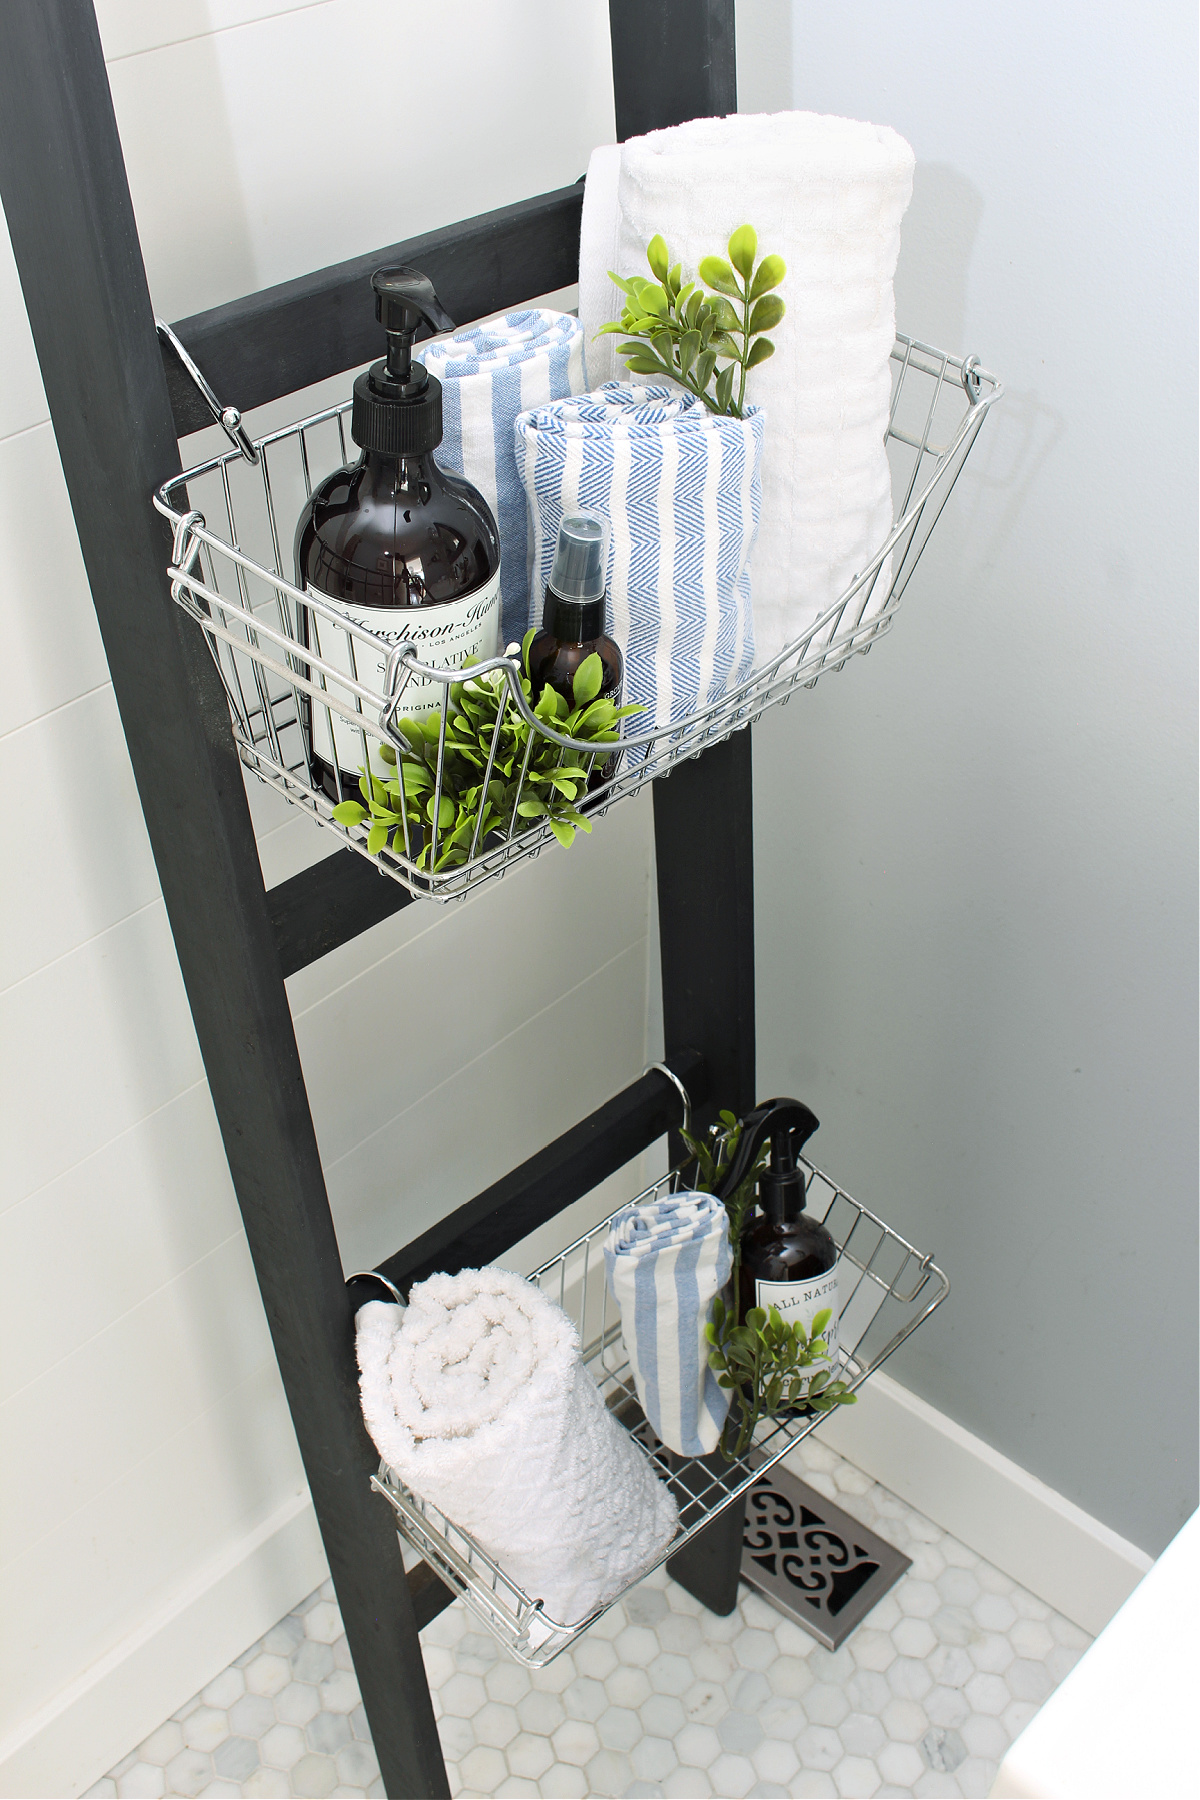 https://www.cleanandscentsible.com/wp-content/uploads/2015/03/bathroom-storage-ladder-baskets-Clean-and-Scentsible.jpg